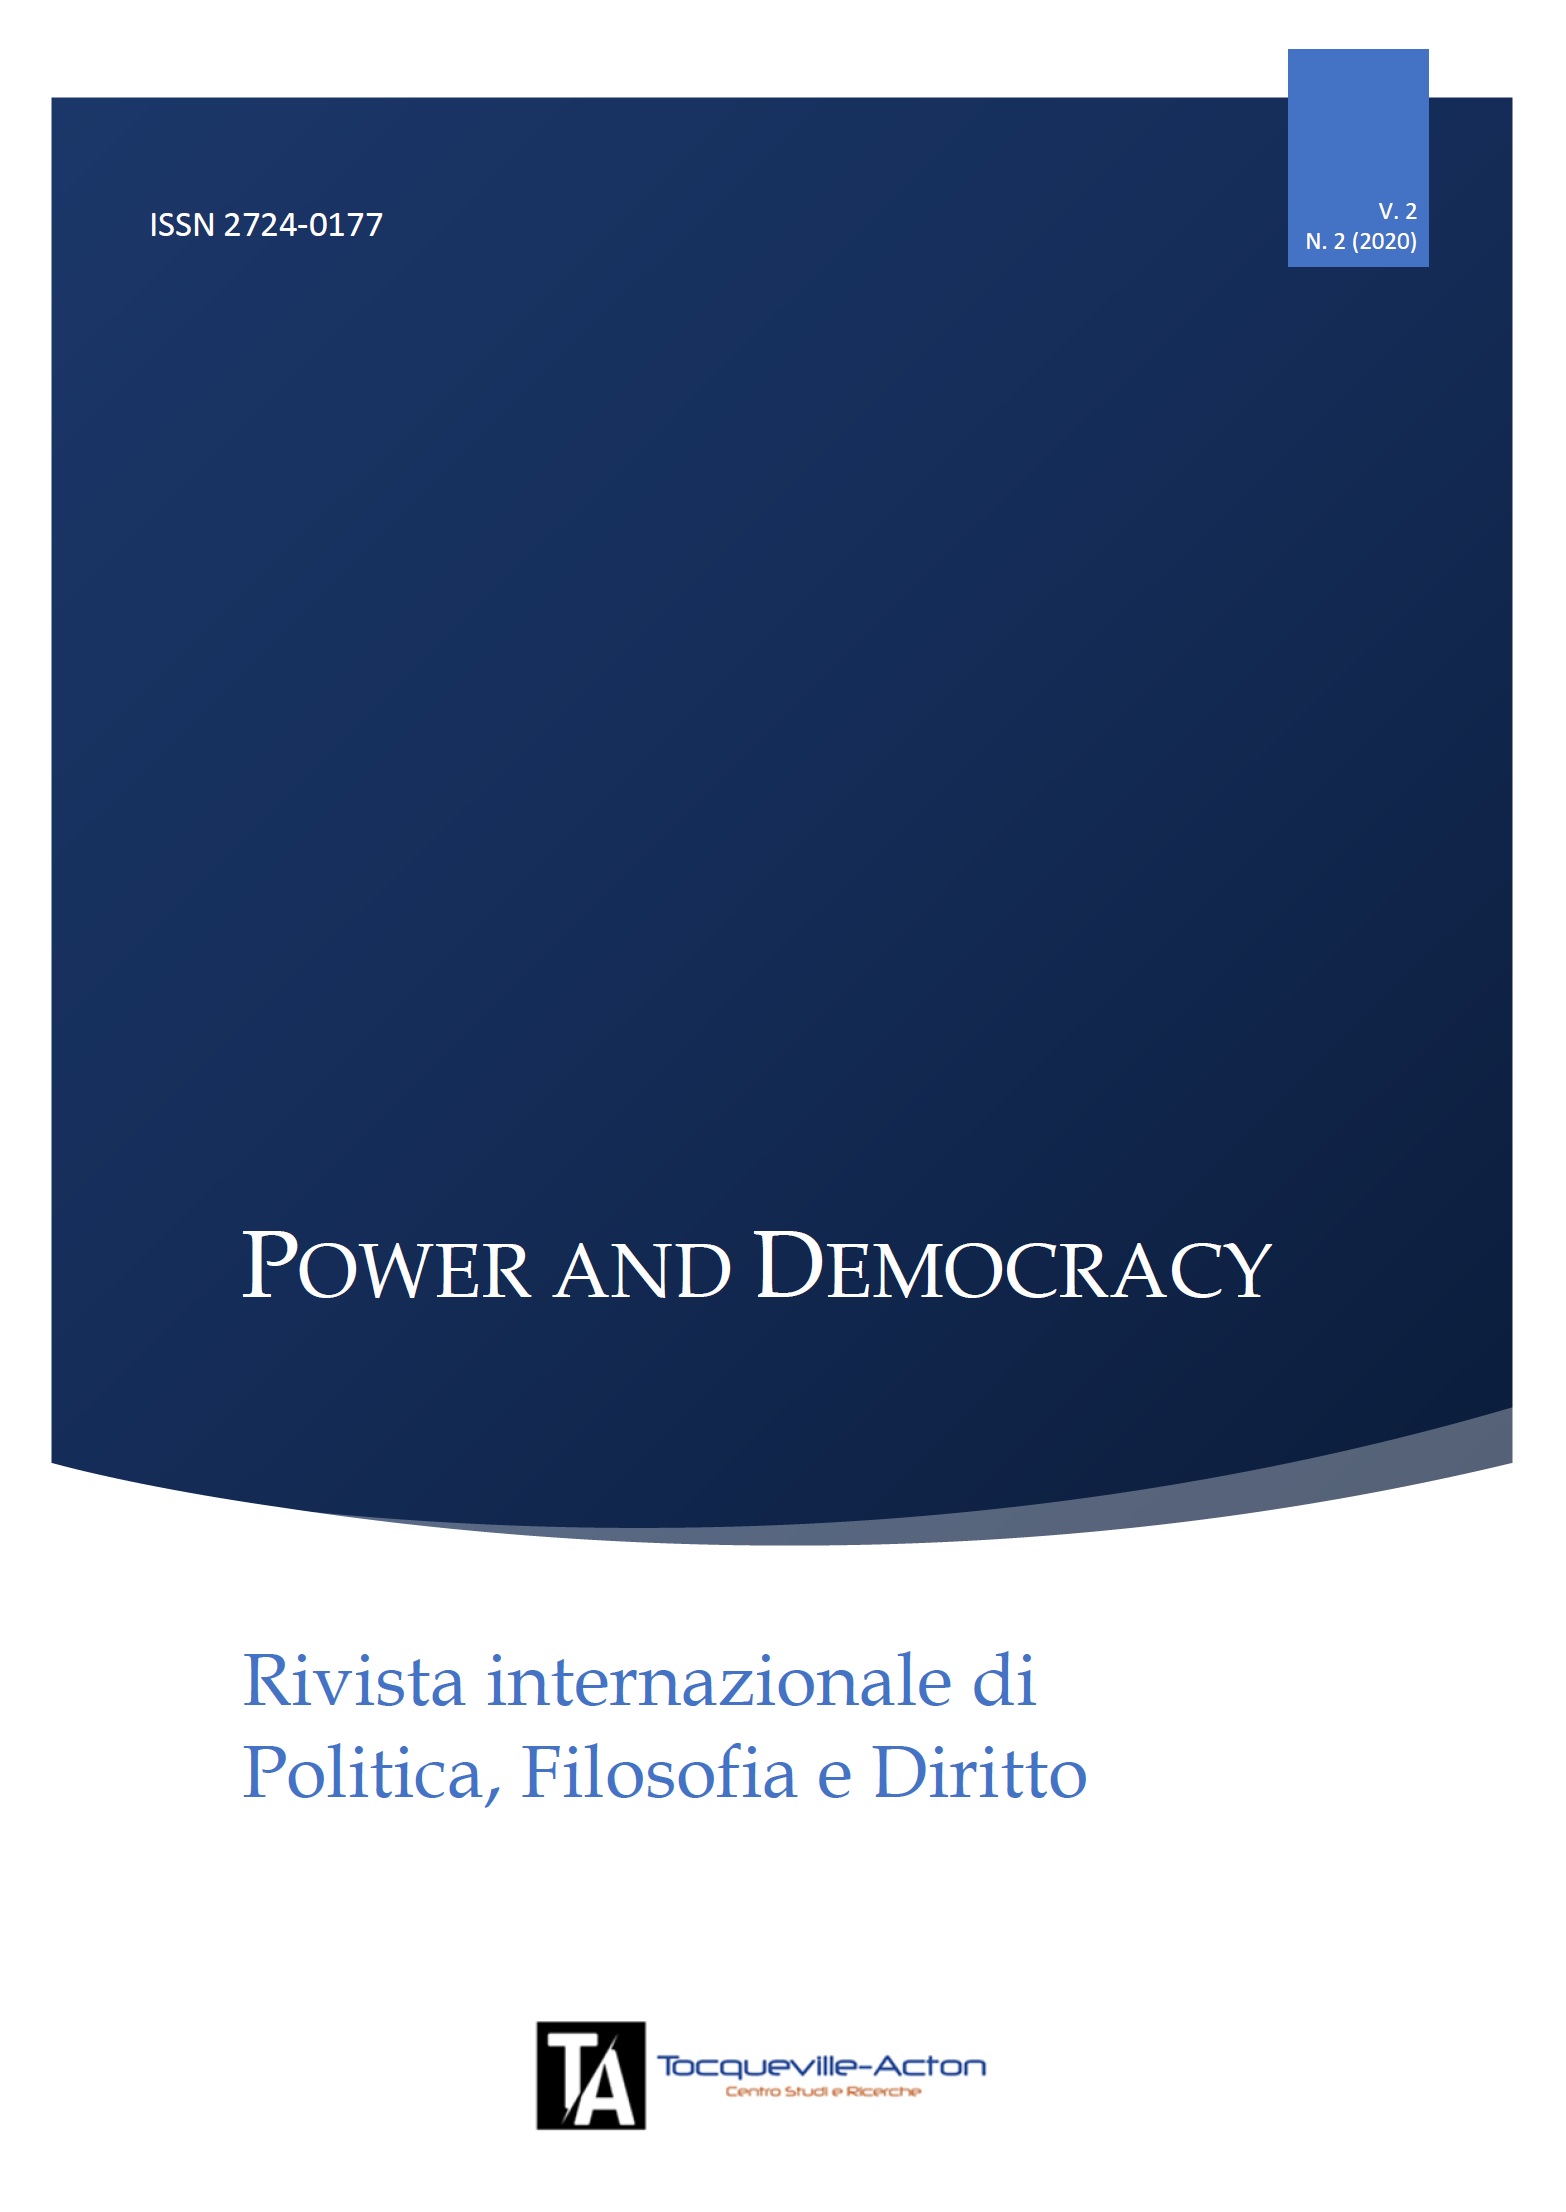 Power and Democracy _ Anno I, V. 2, N. 2 (2020)